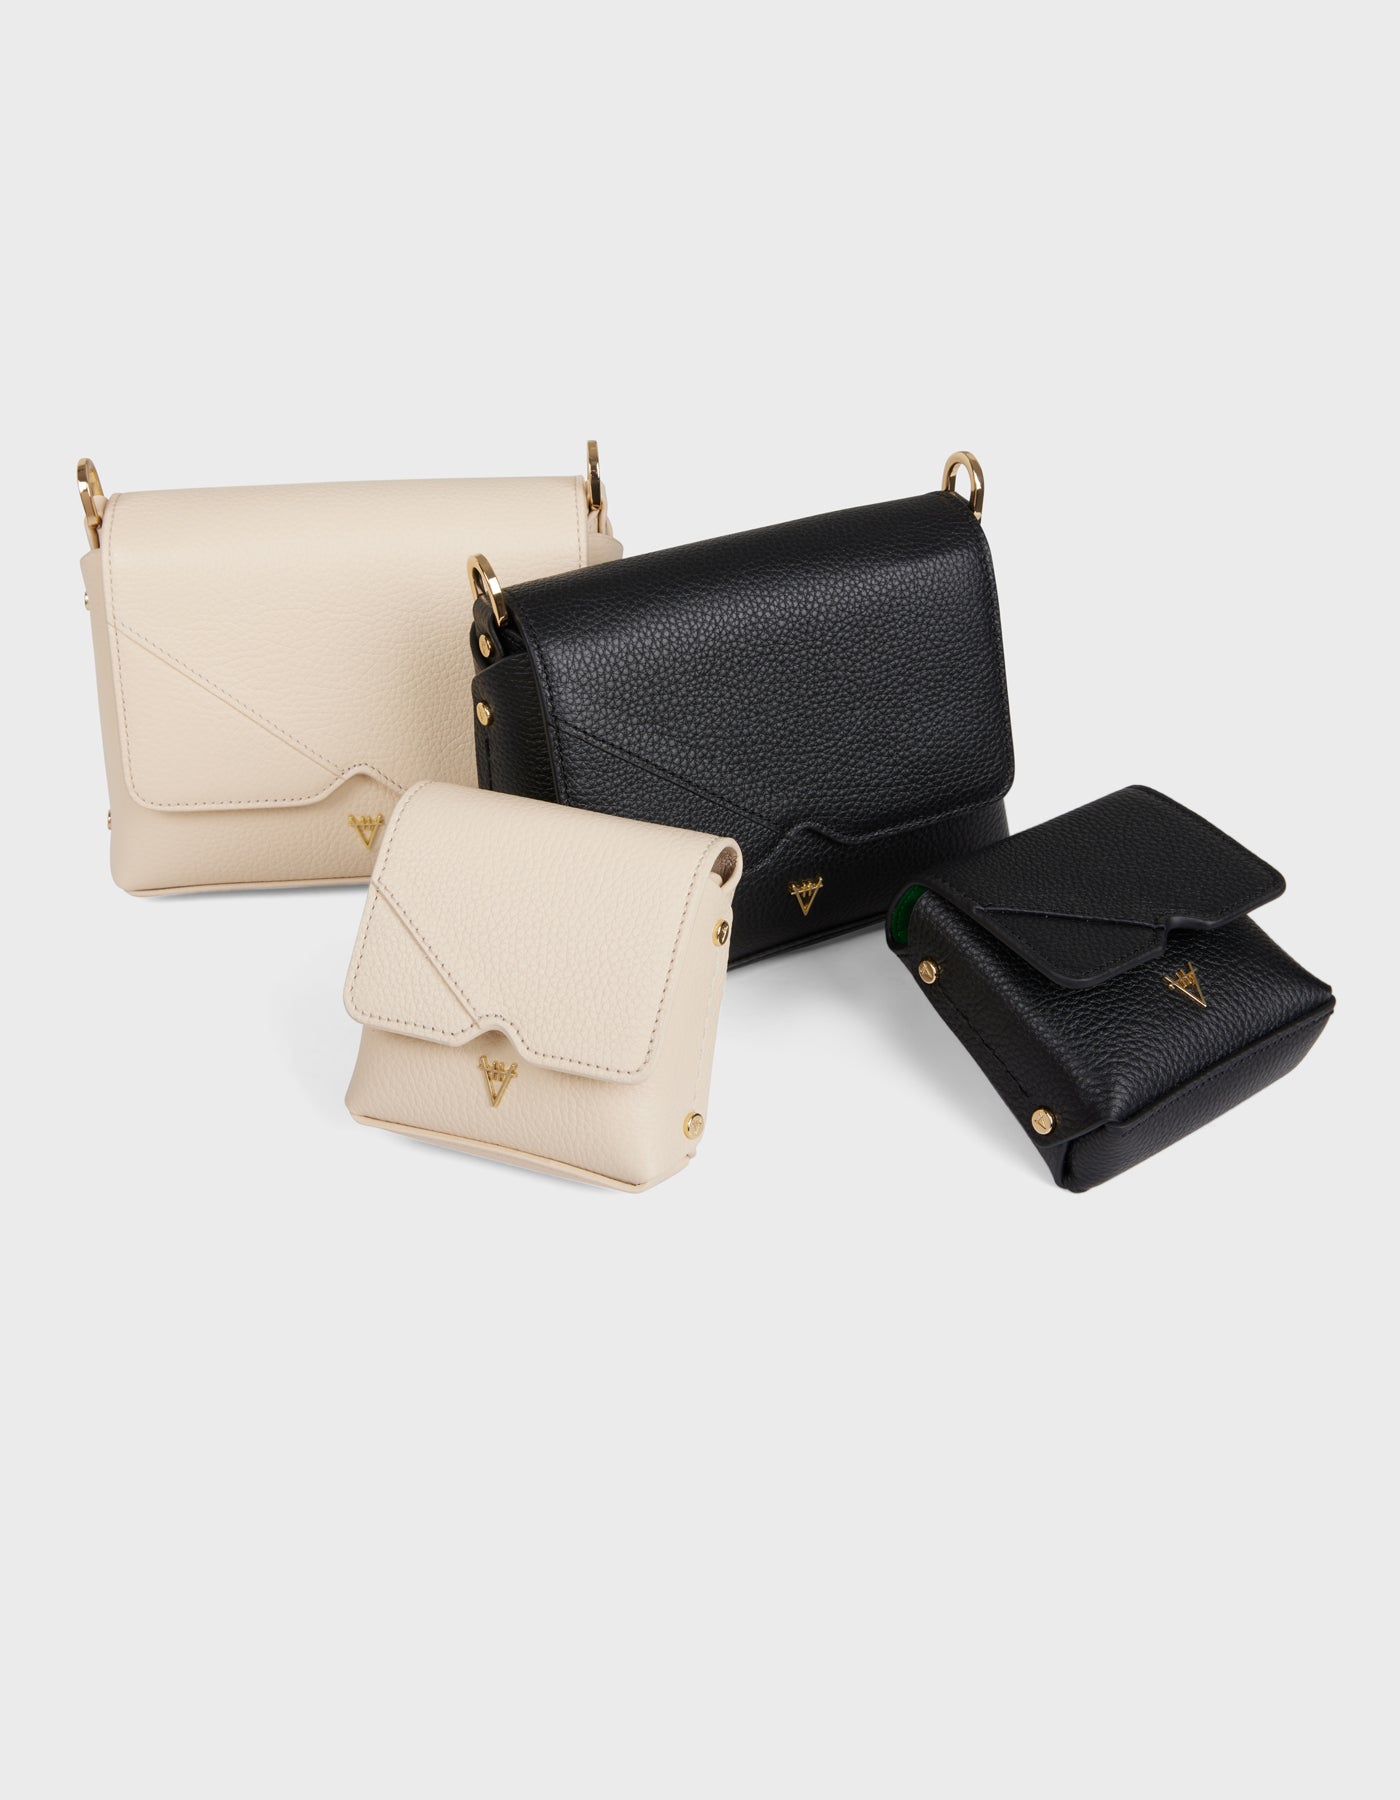 Mini Mare Shoulder Bag - Finest Quality HiVa Atelier GmbH Leather Accessories